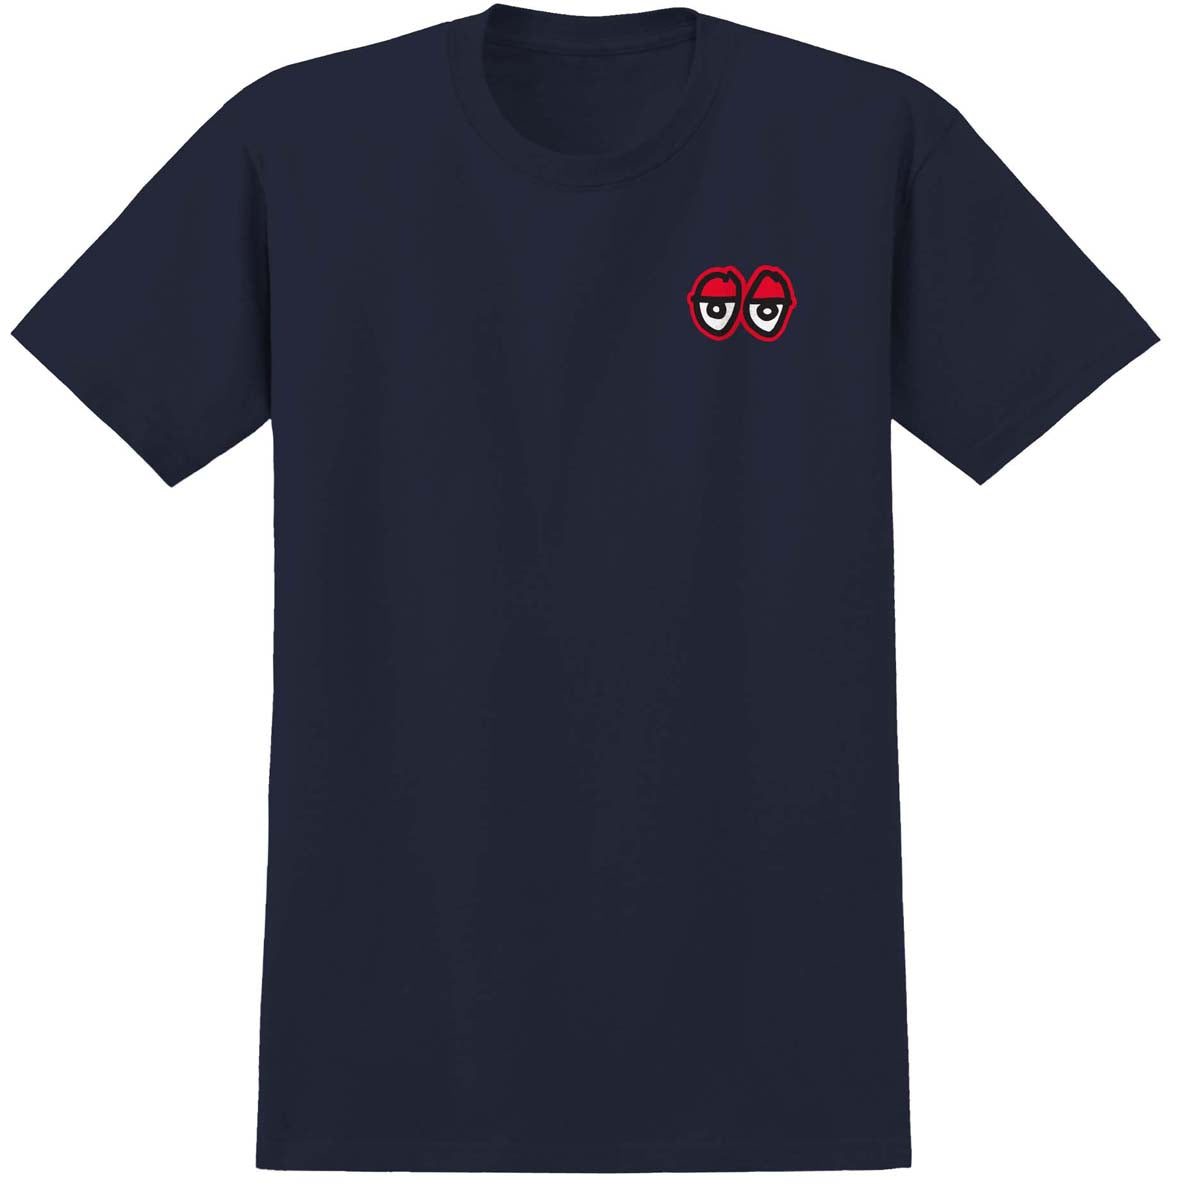 Krooked Strait Eyes T-Shirt - Navy/Red image 2